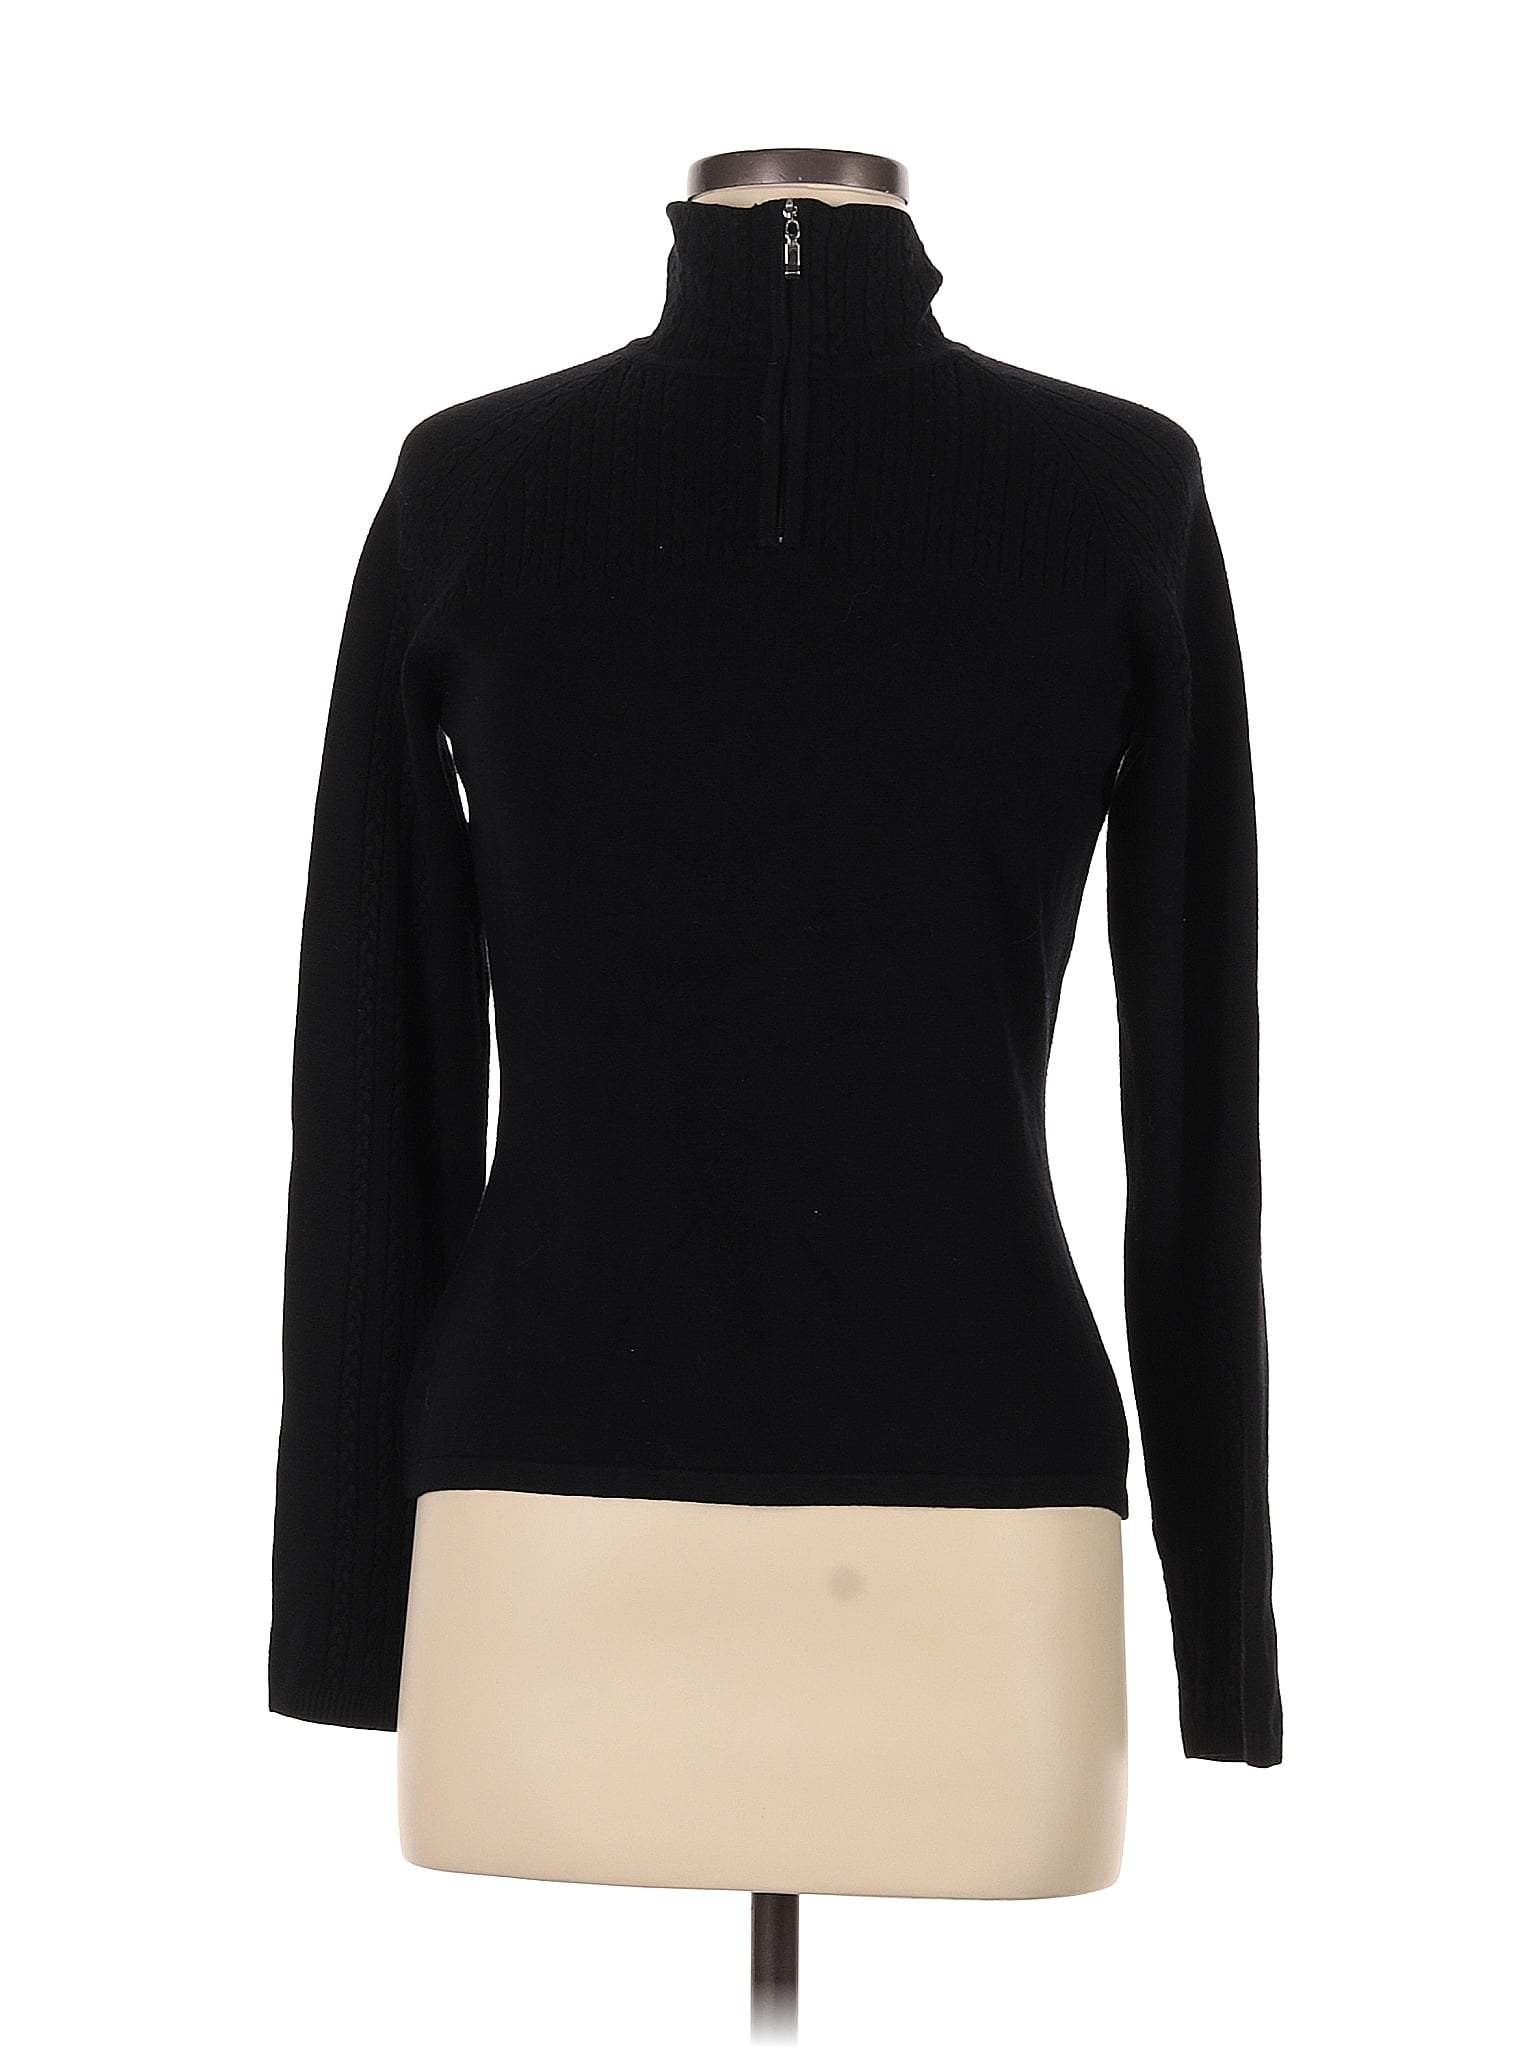 NILS Sportswear Color Block Solid Black Turtleneck Sweater Size M